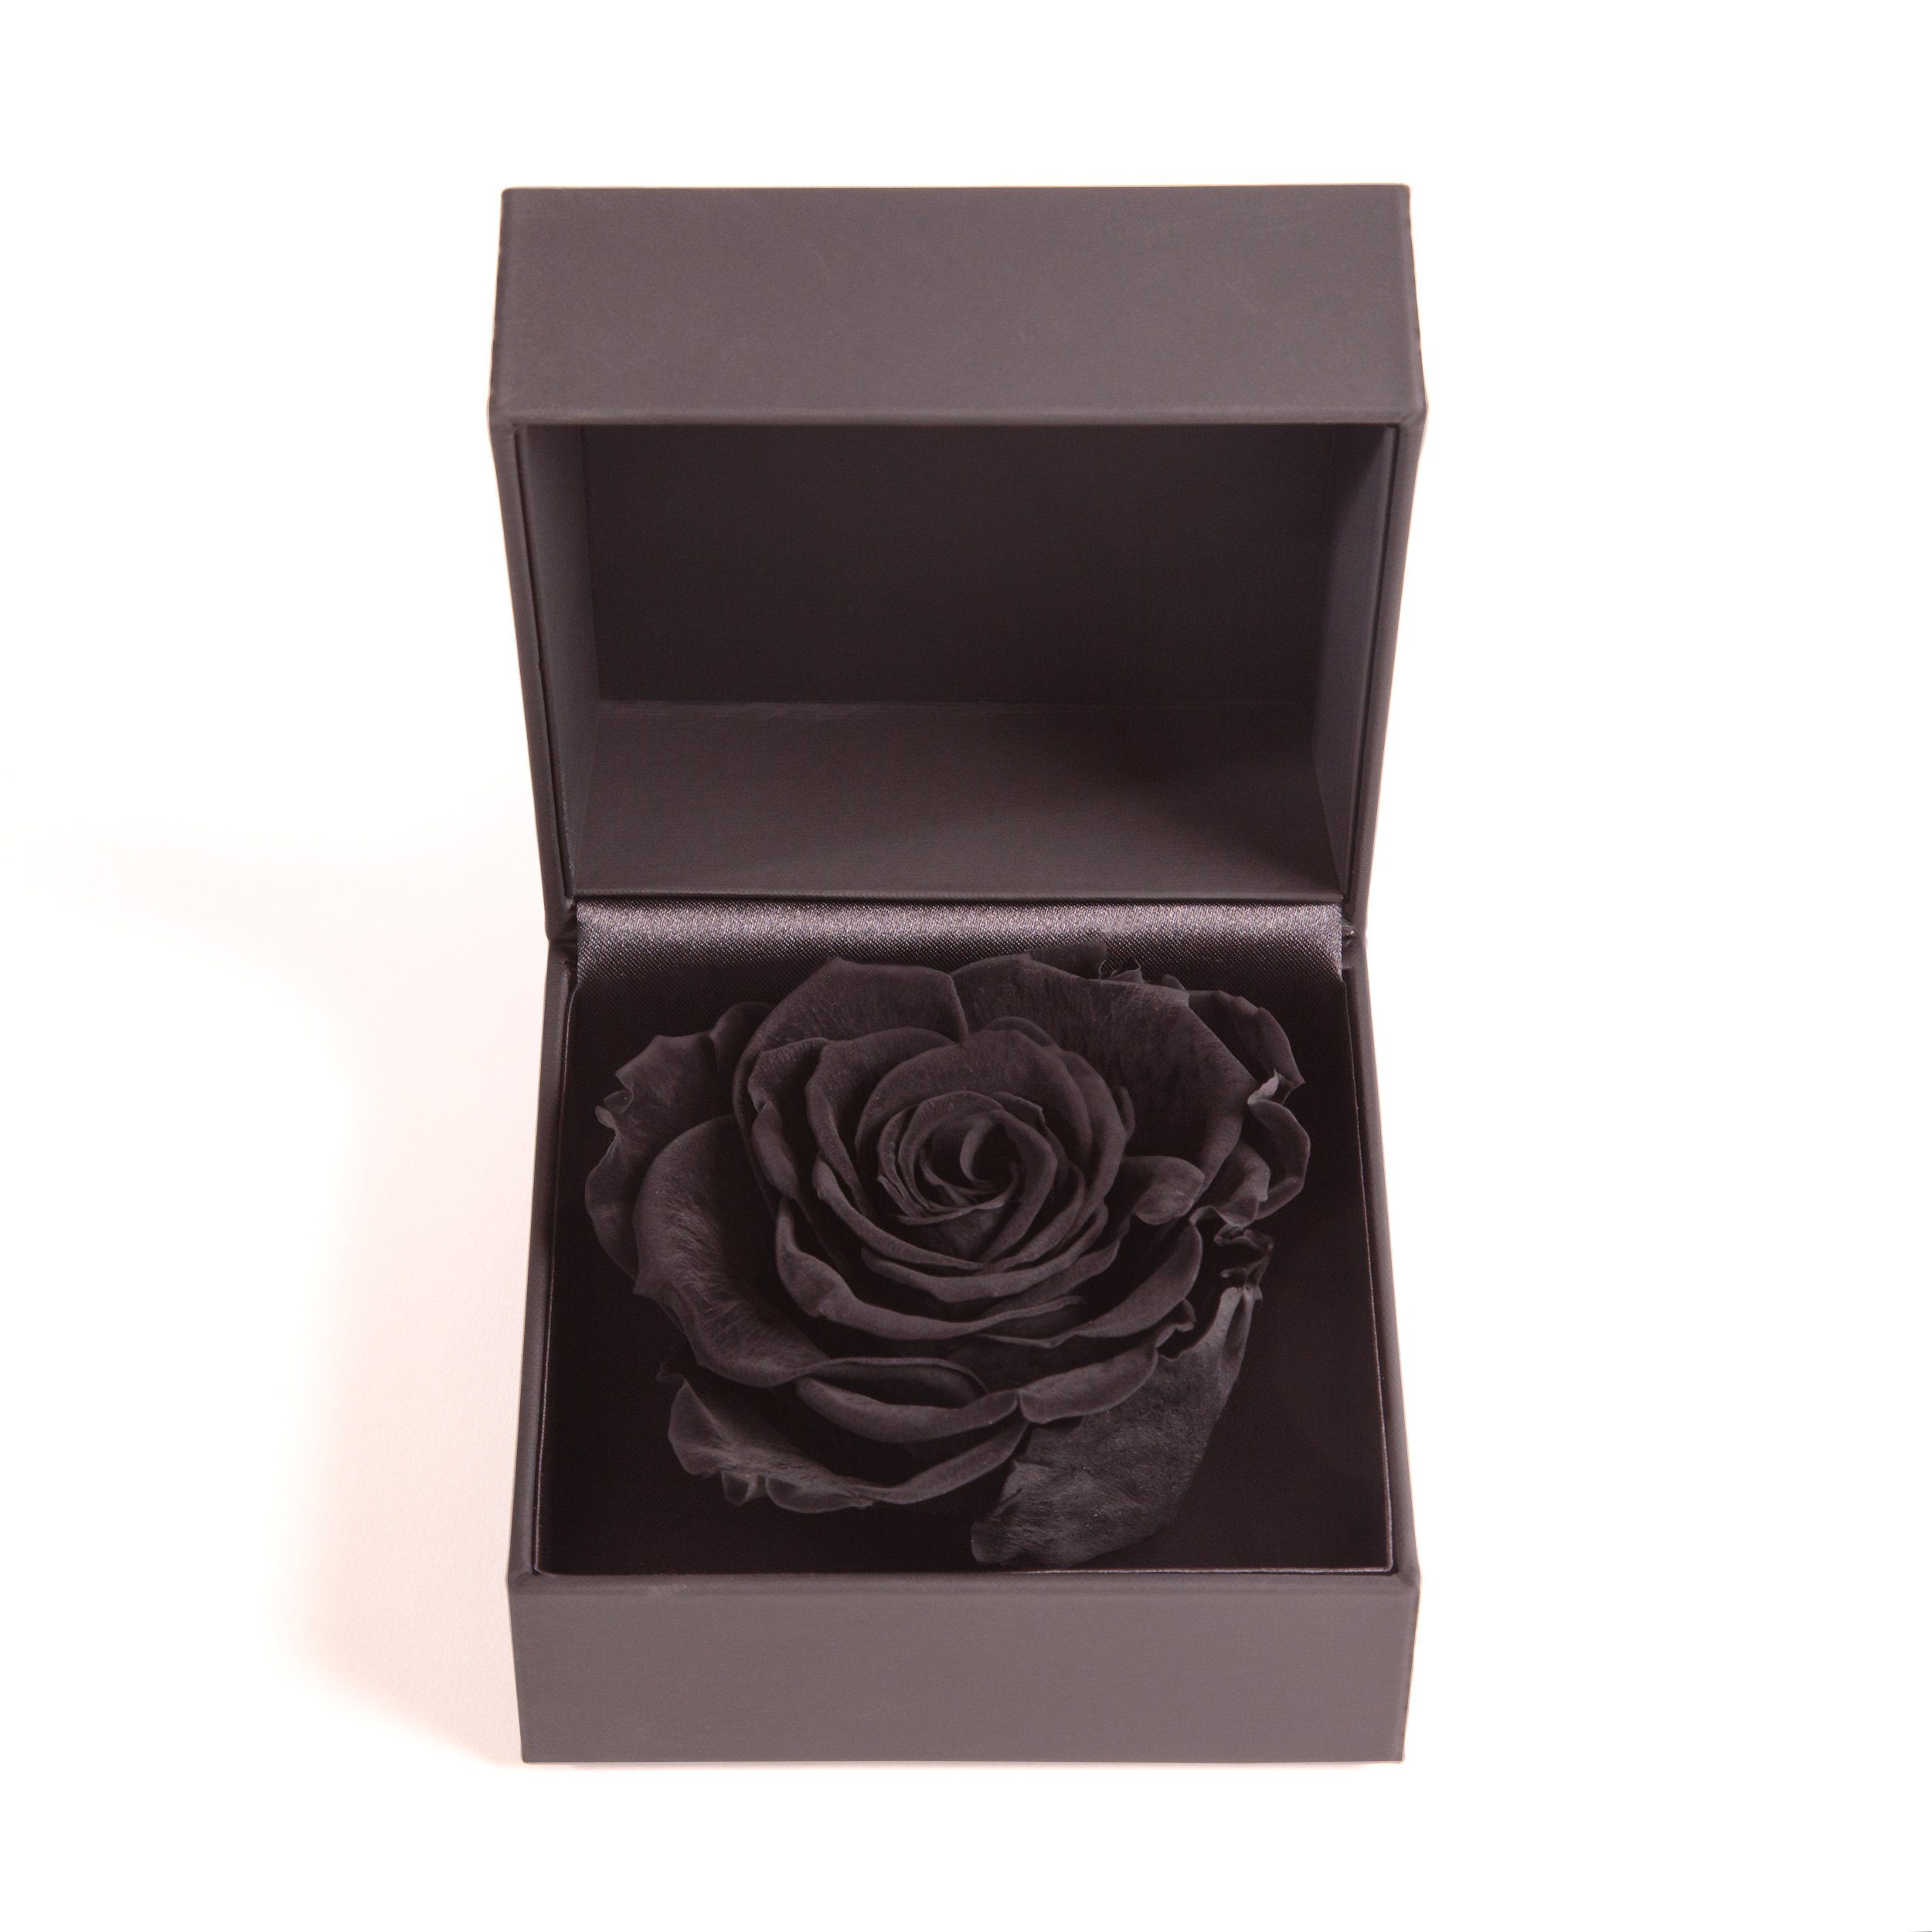 Kunstblume Rosenbox Ringbox Infinity Rose Box ROSEMARIE in Groß Langlebige Rose, SCHULZ Schwarz Heidelberg, Höhe Ringdose konserviert Rose cm, 9